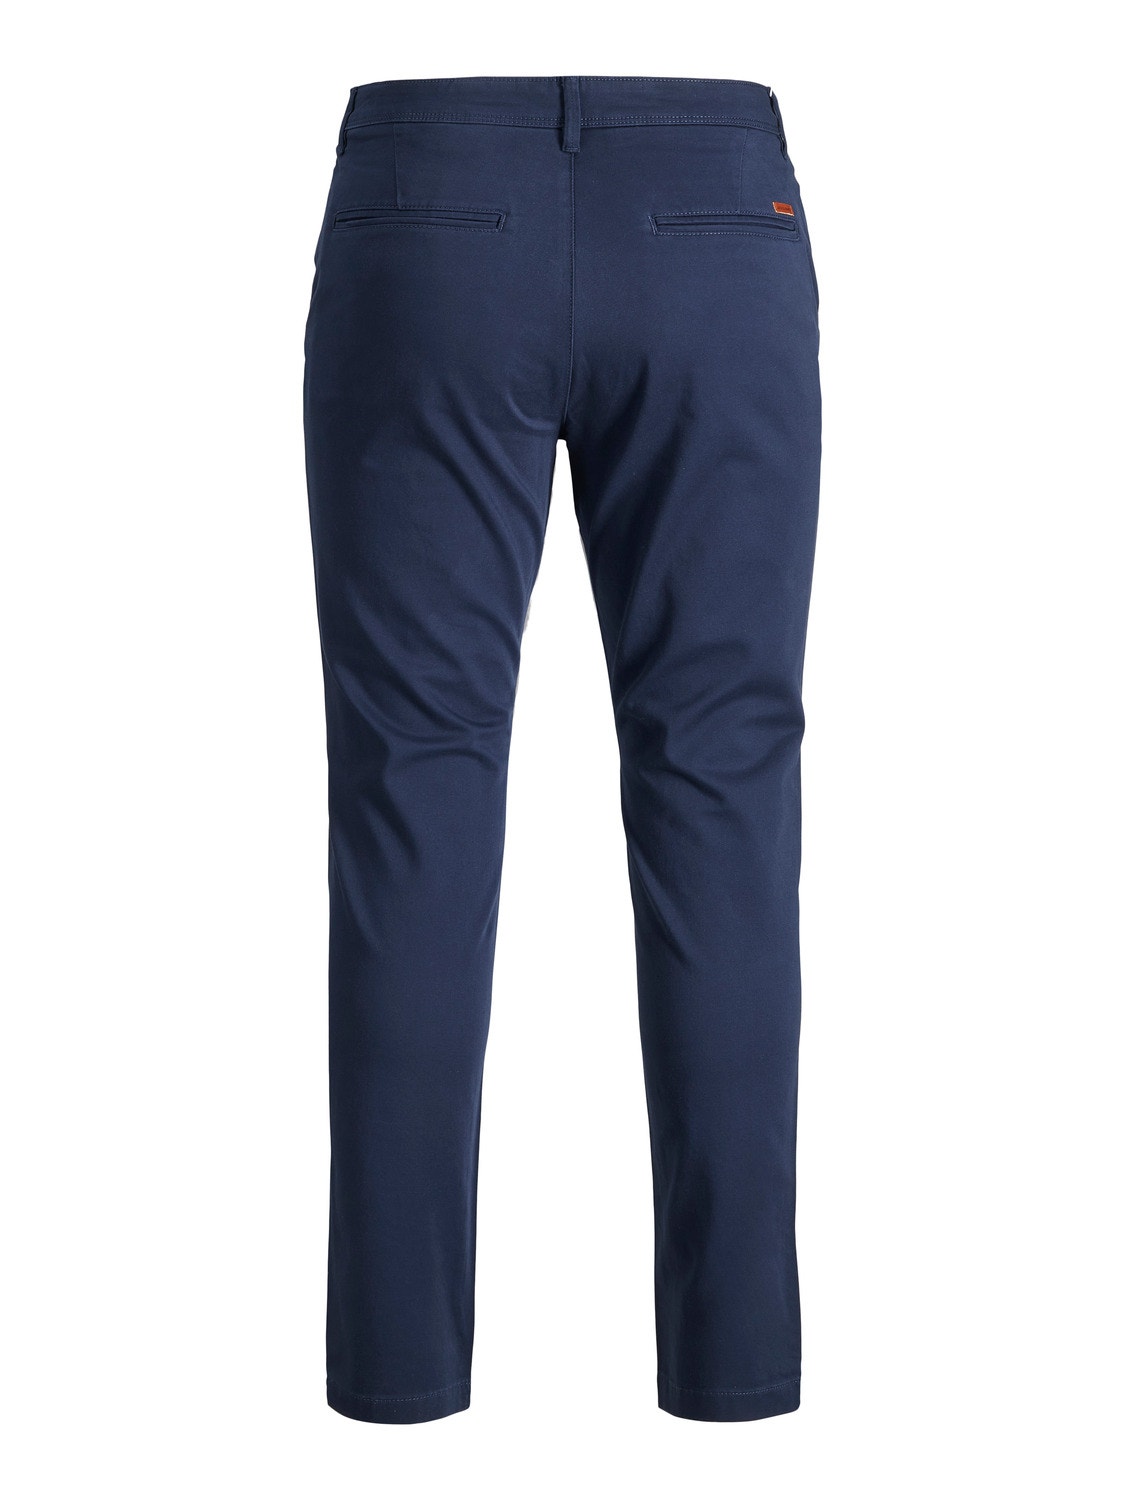 Jack & Jones Slim Fit Spodnie chino -Navy Blazer - 12150148